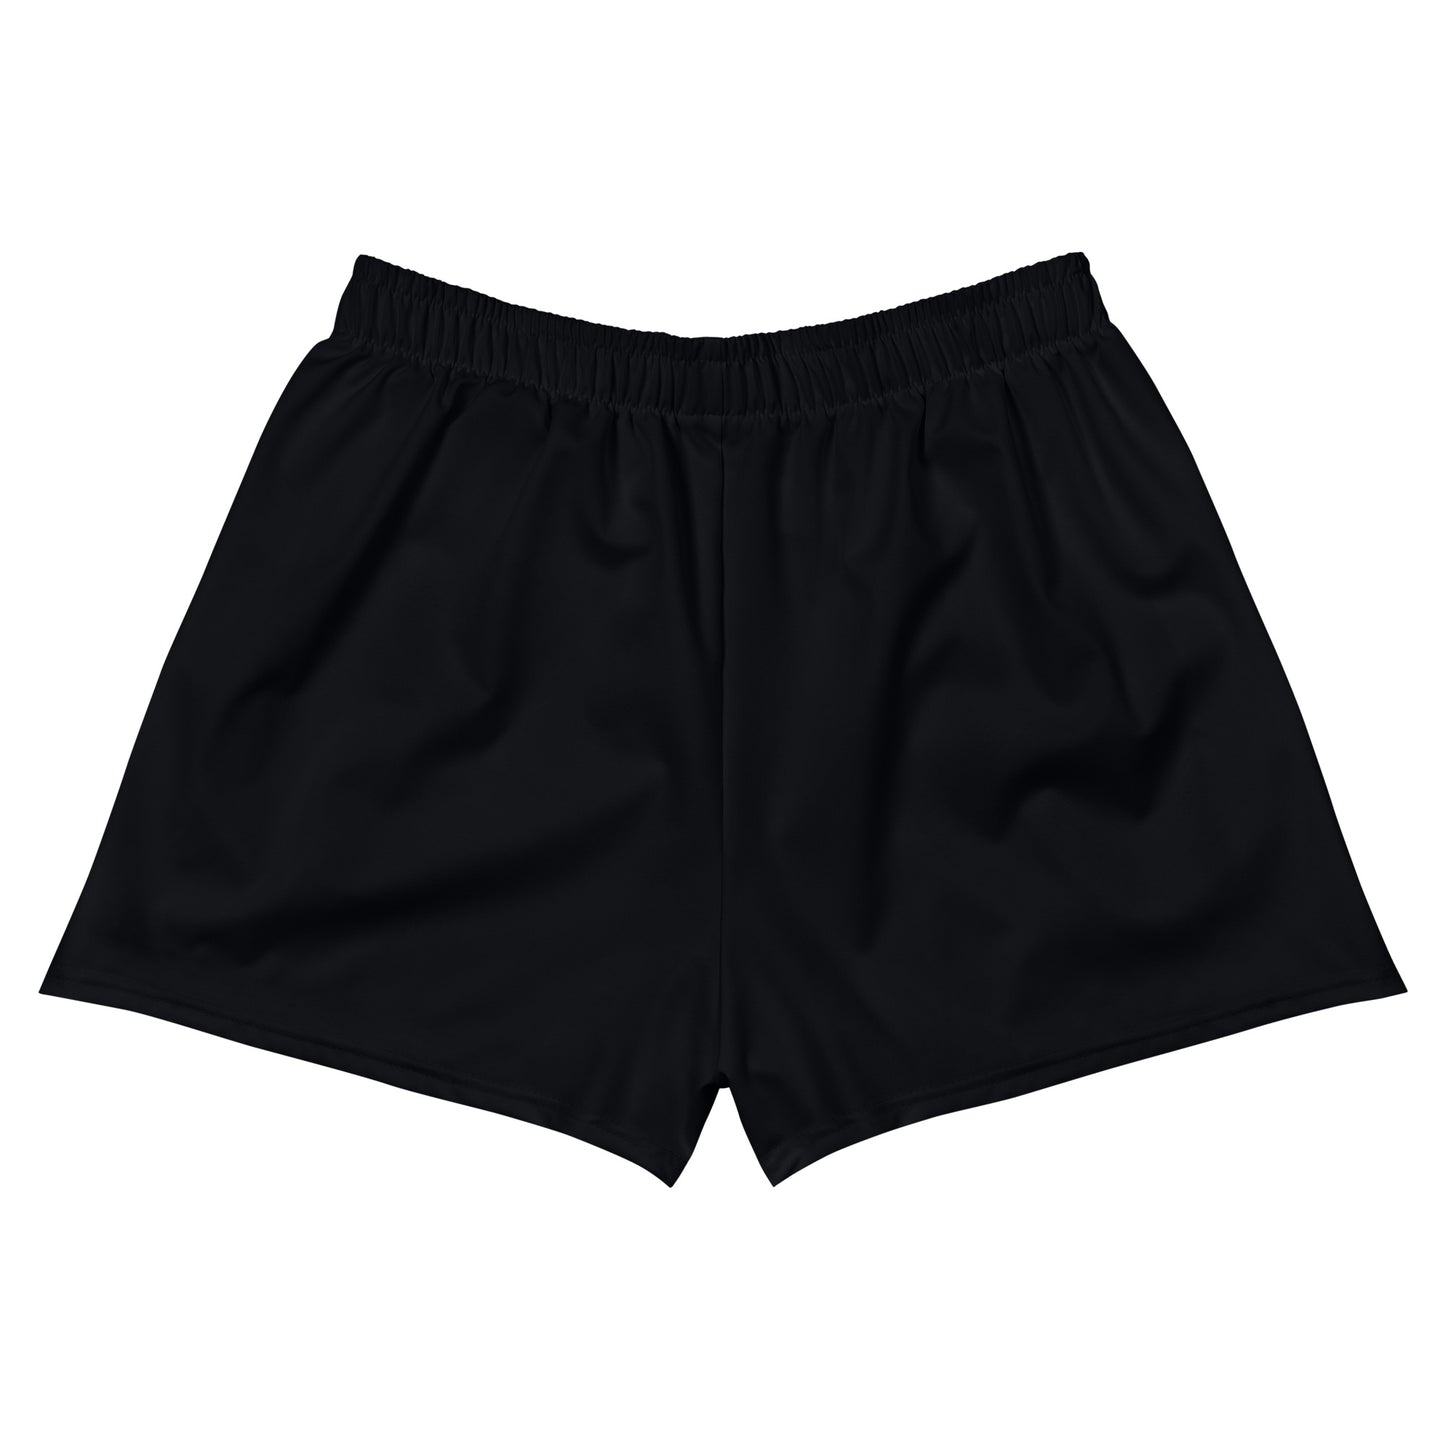 DILF in Progress Athletic Shorts (Short)